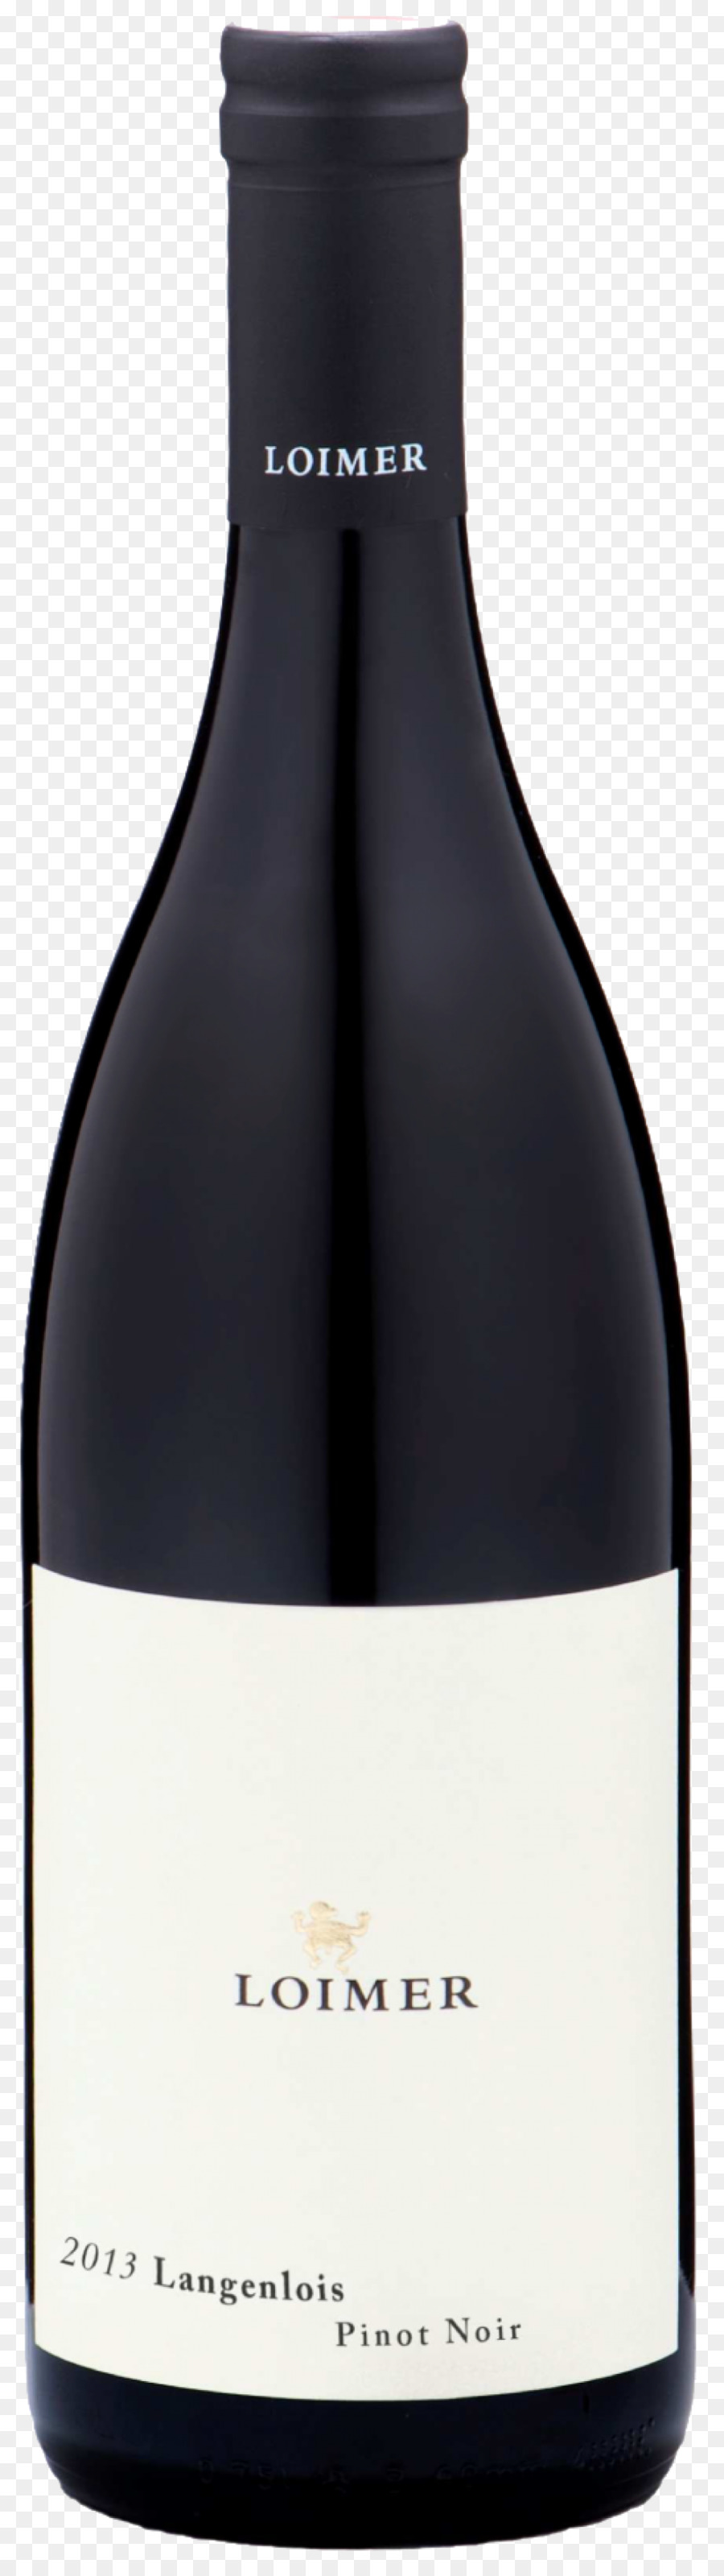 Shiraz Almor Wein & Spirituosen, Pinot noir, Grenache - Wein